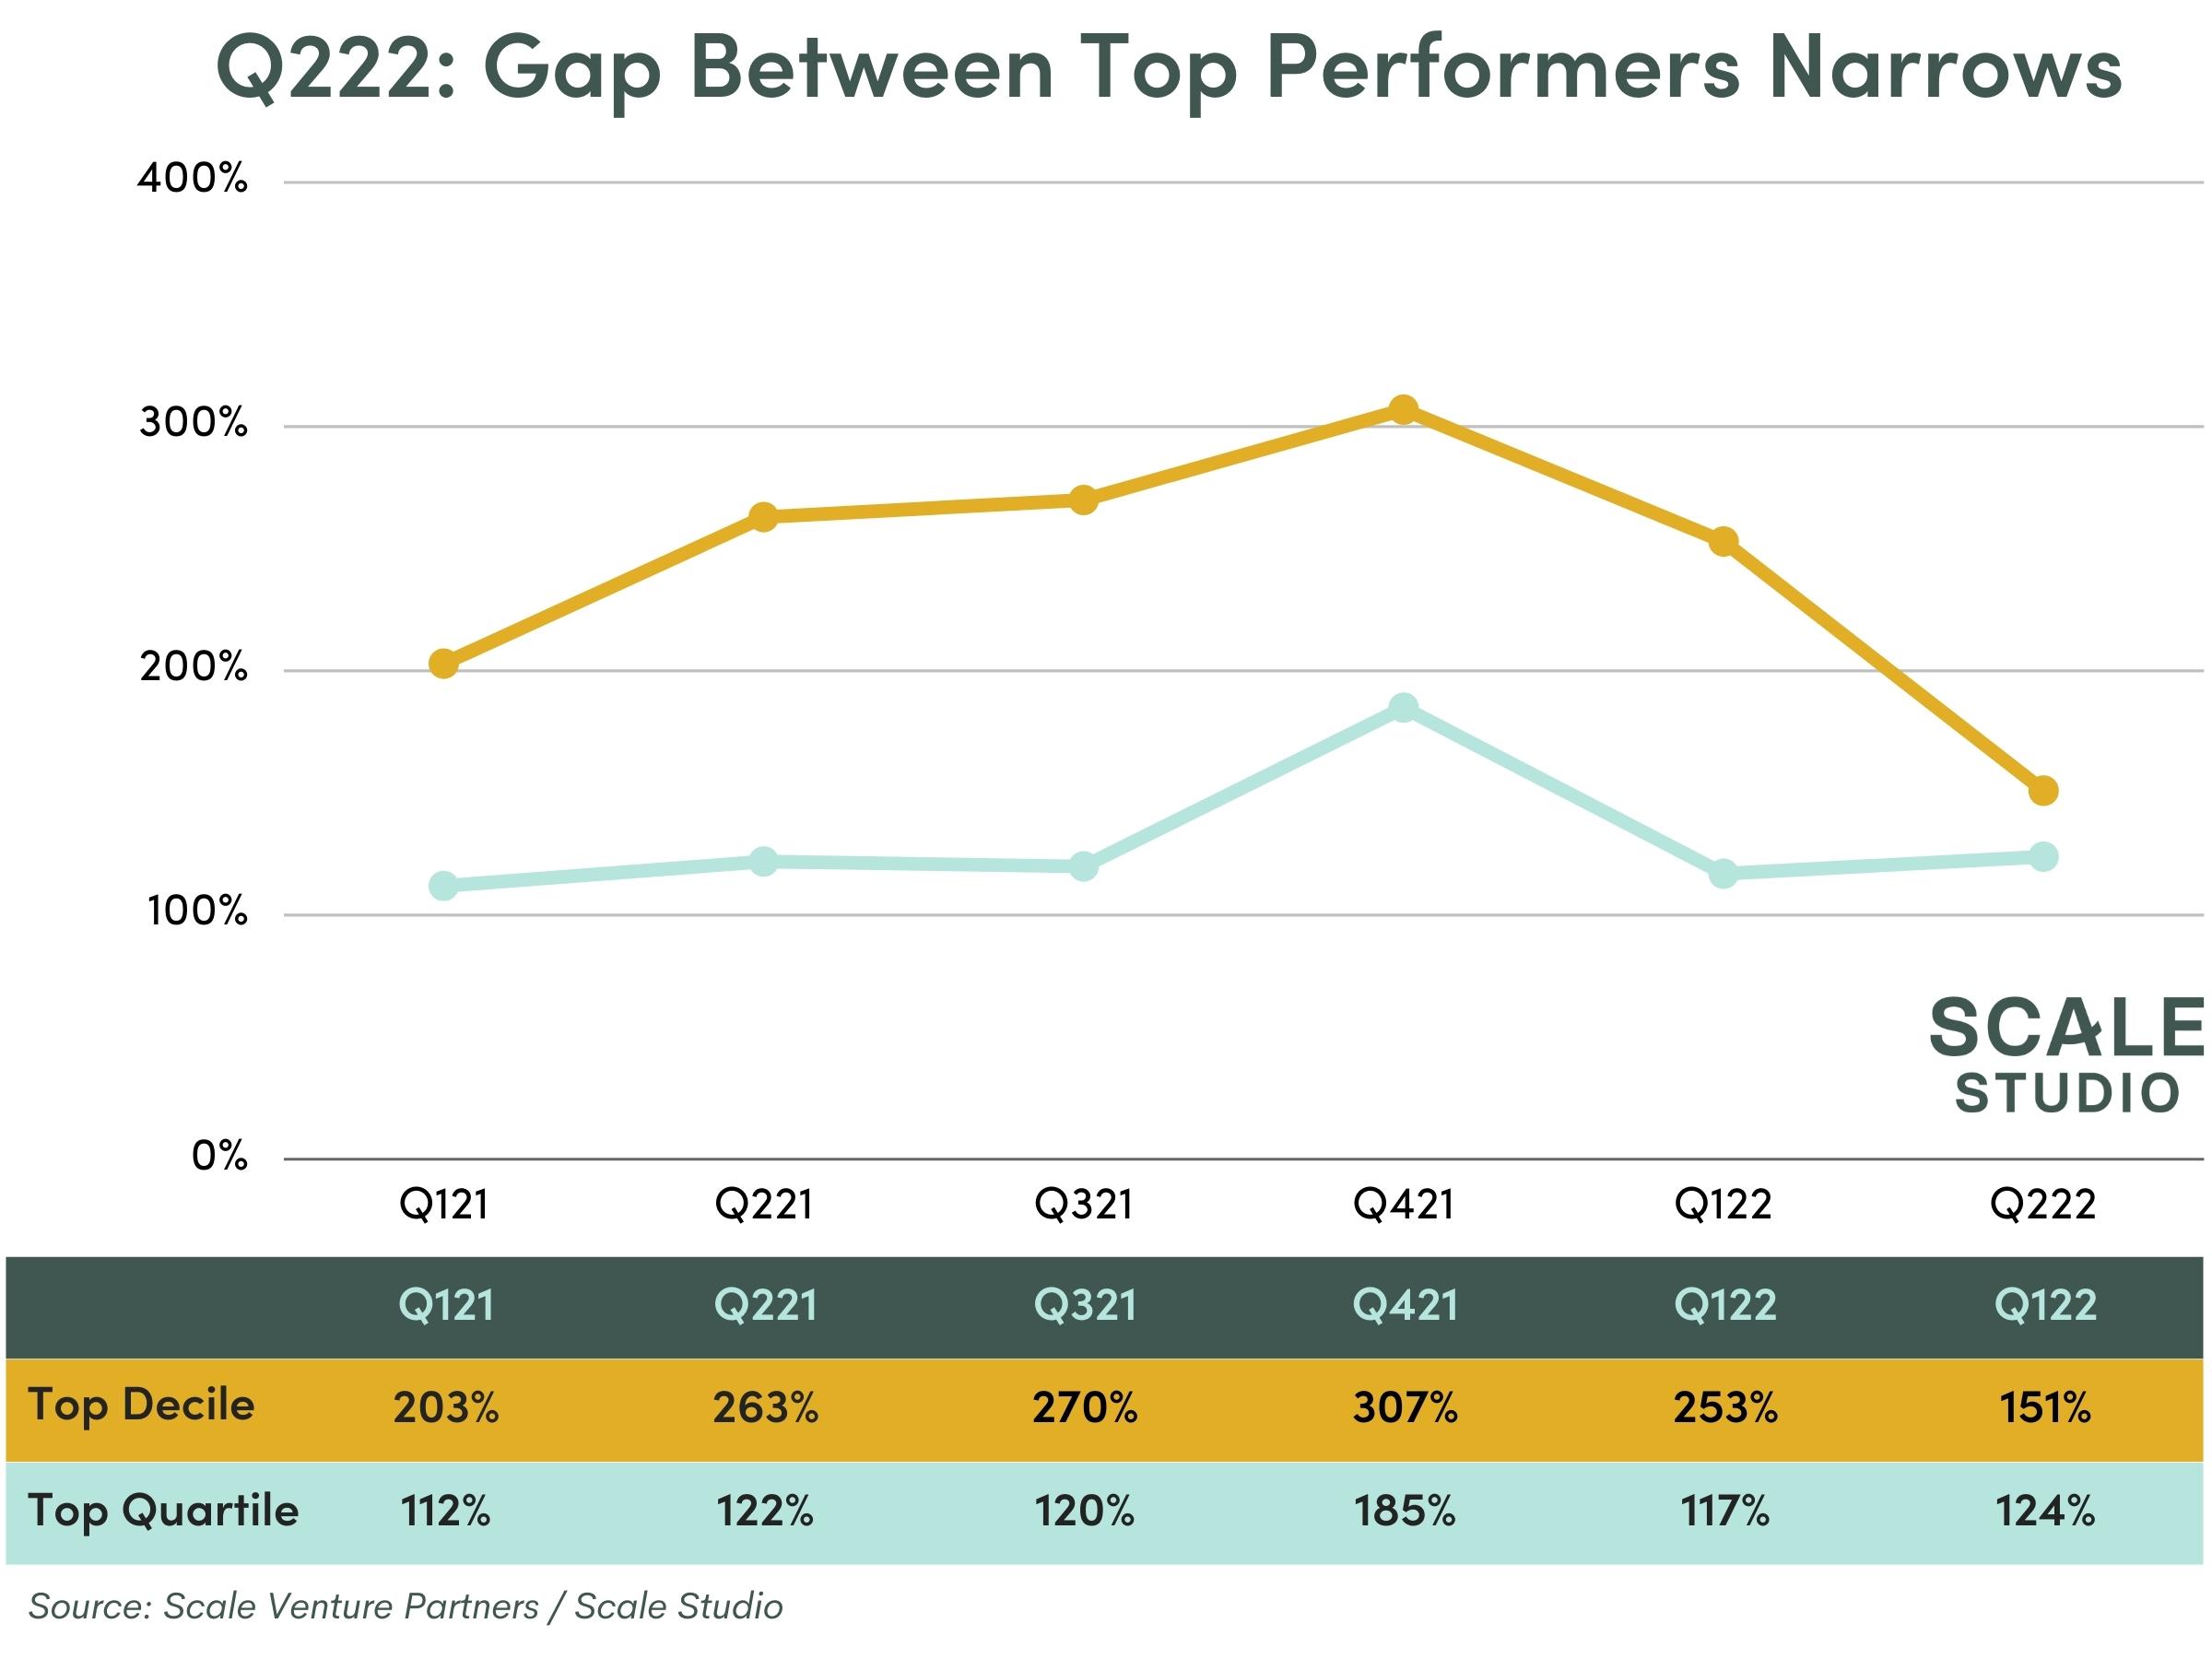 Q222: Gap Between Top Performers Narrows